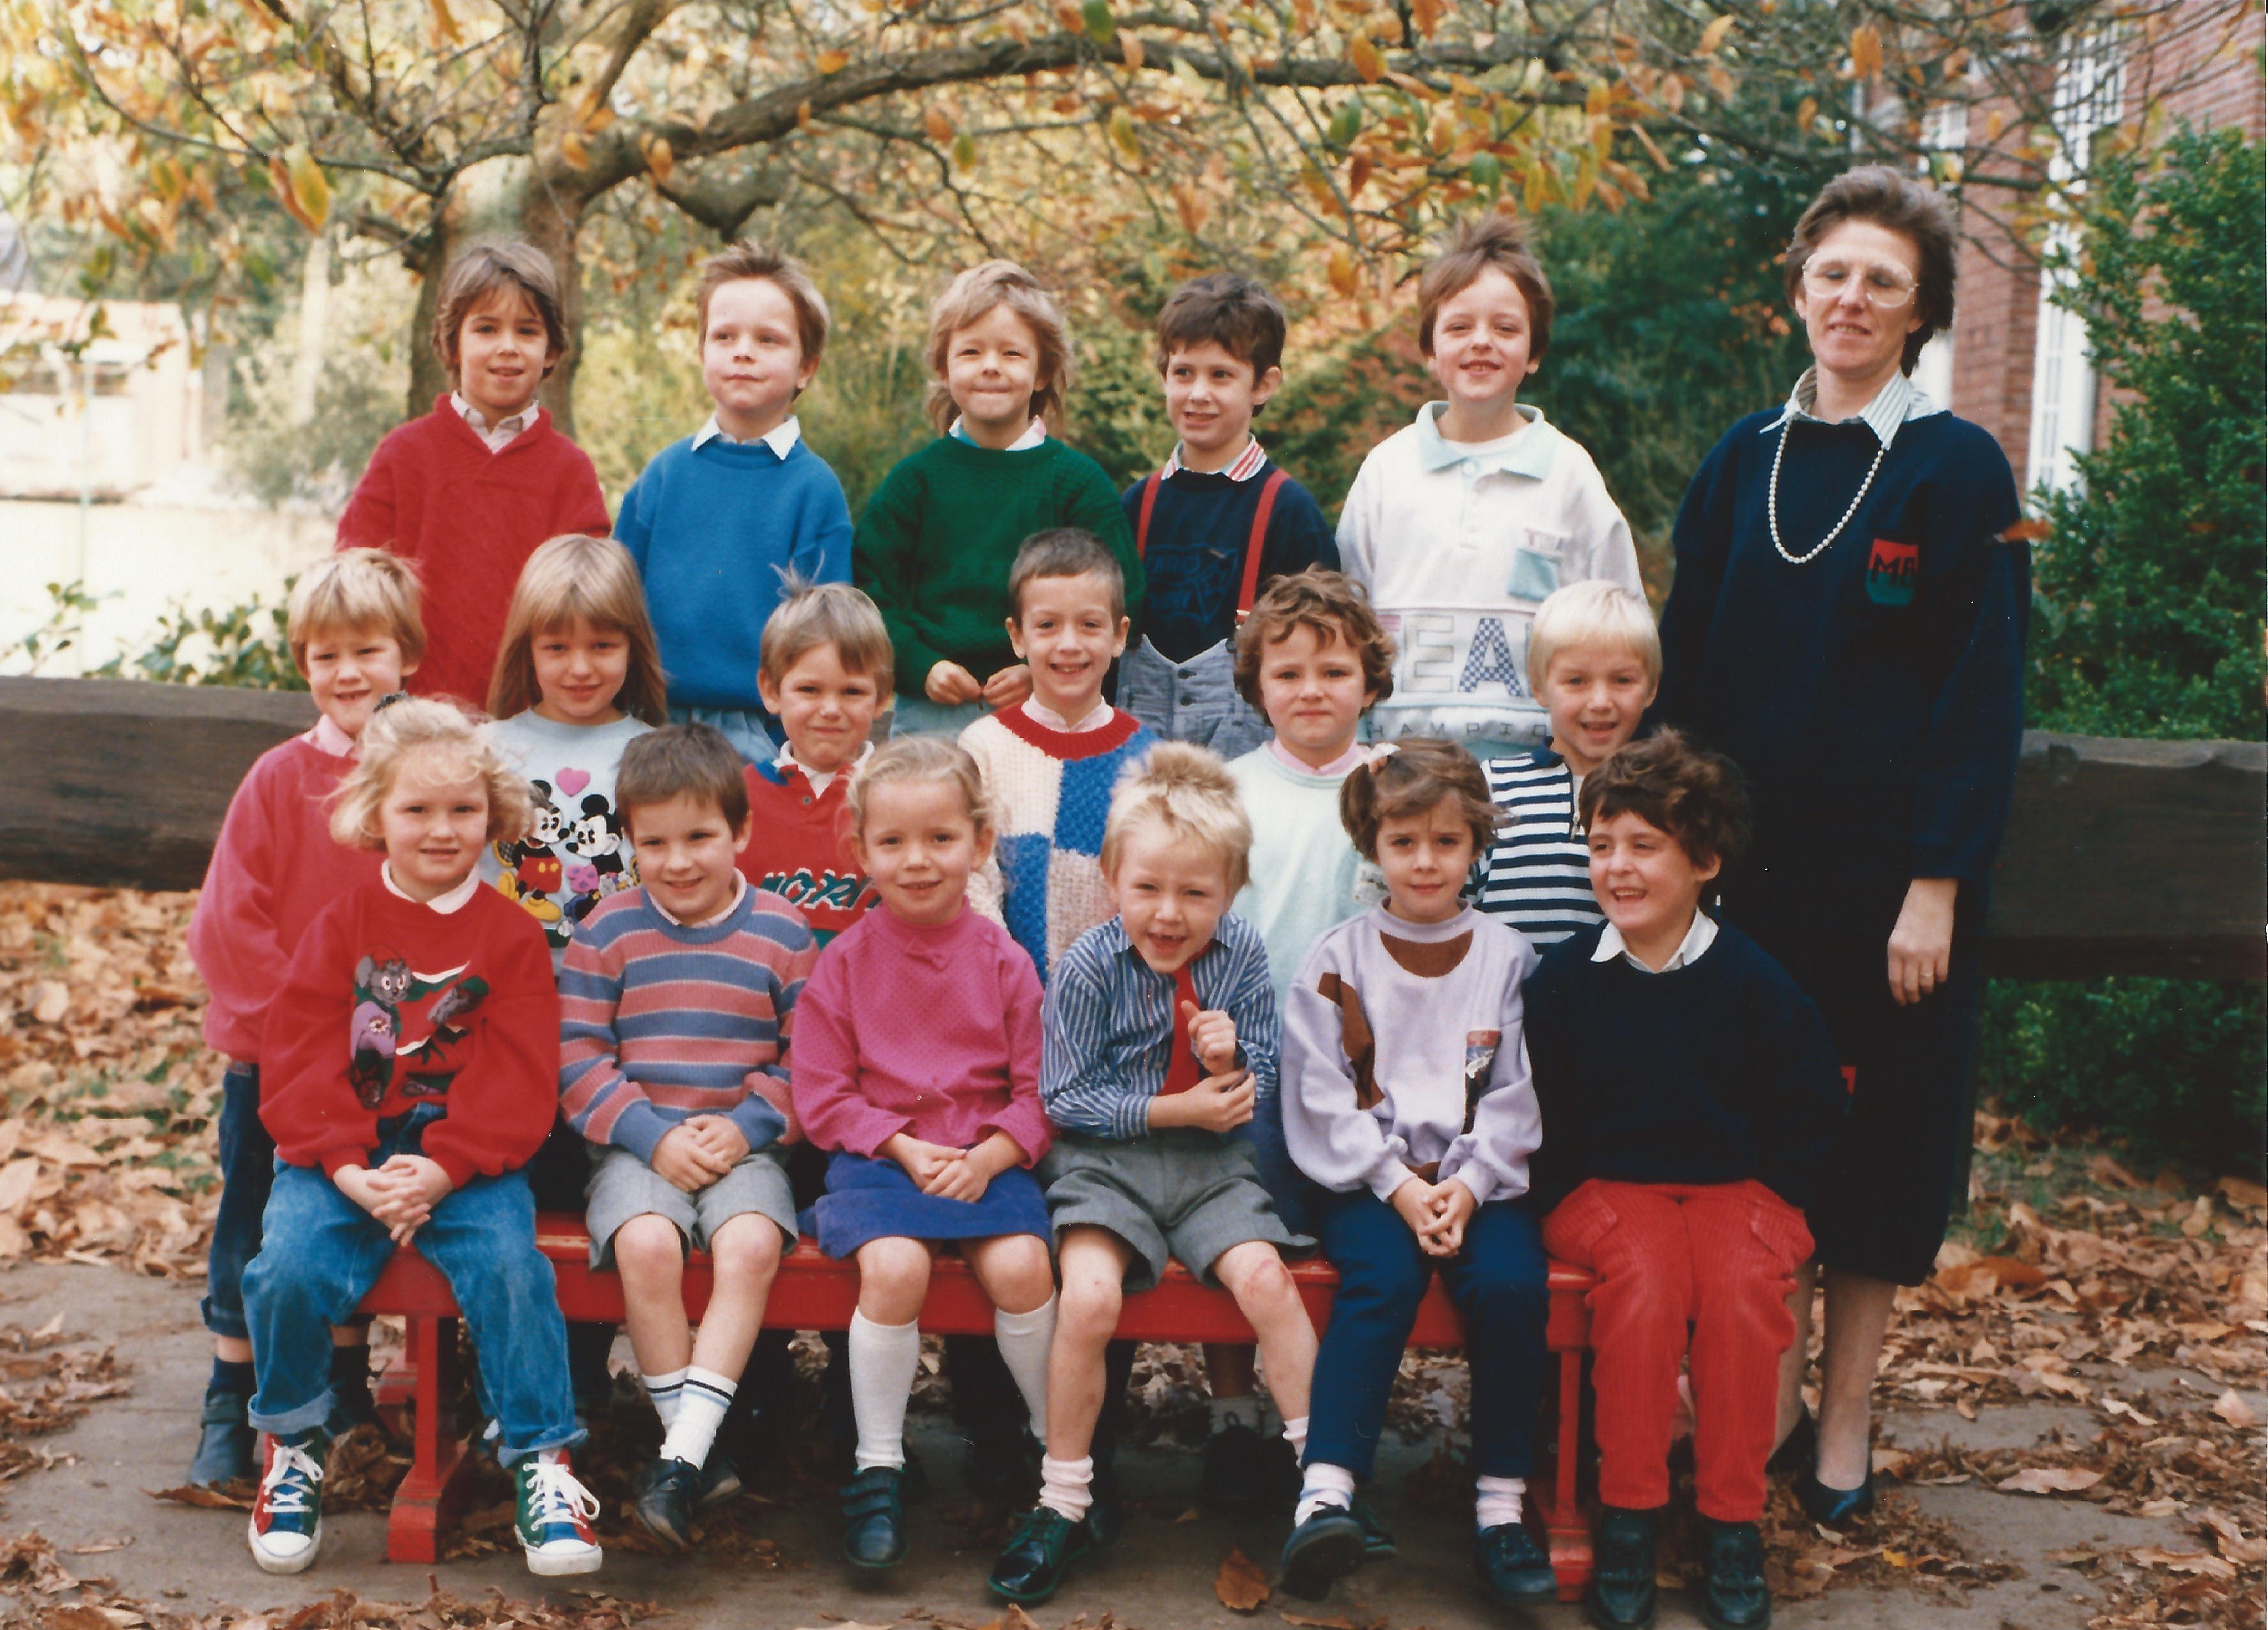 1988-1989 klasfoto 4e kleuterklas Maria Van wesenbeeck,Sint Martinusschool, Vrije Gesubsidieerde School, Lindedreef 18.jpg